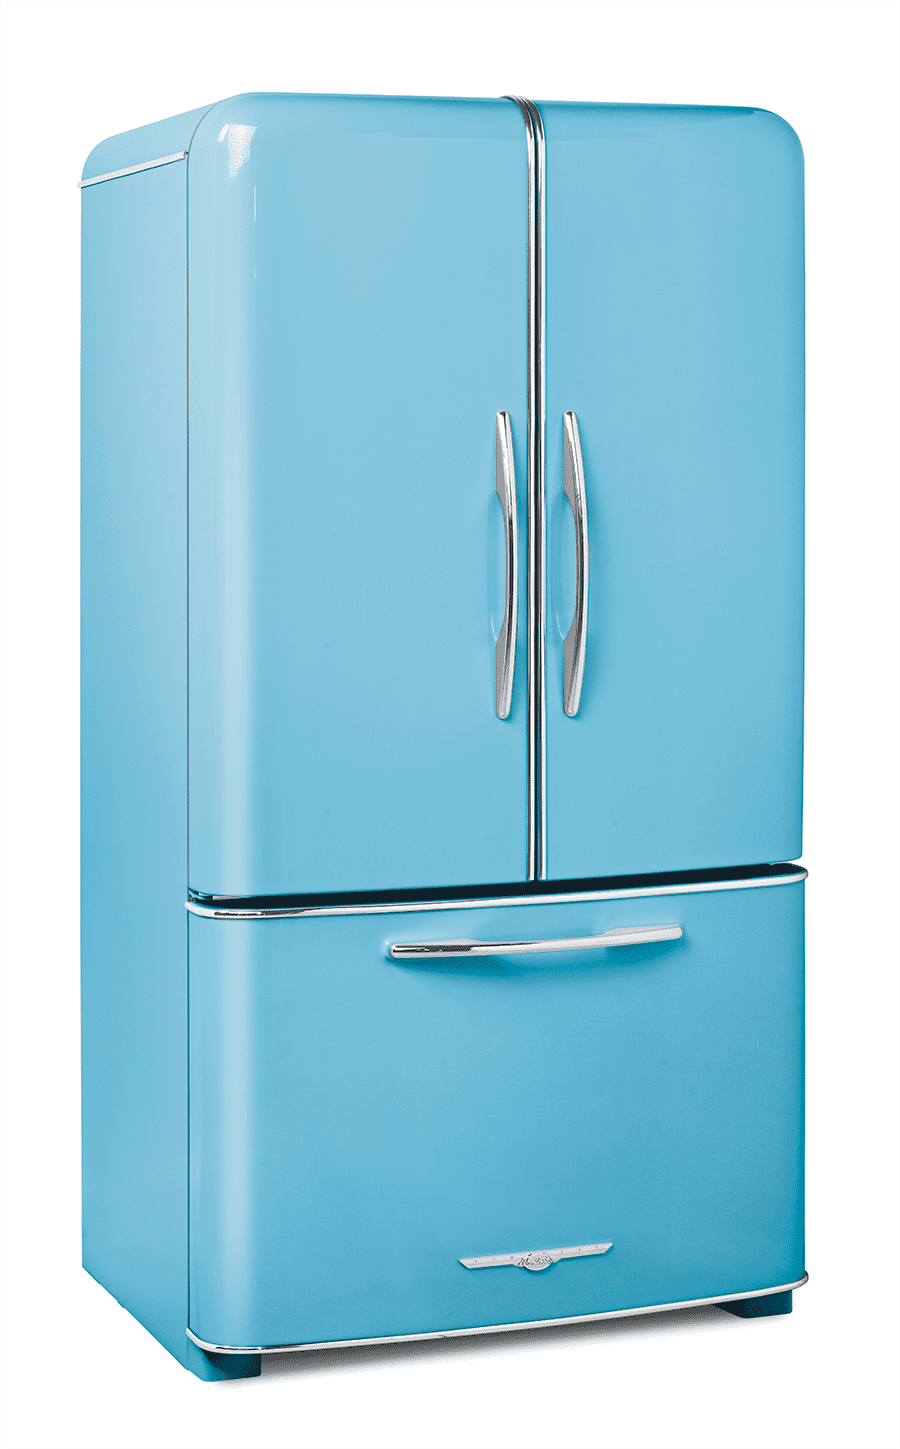 Northstar Refrigerators Model 1959 - Elmira Stove Works